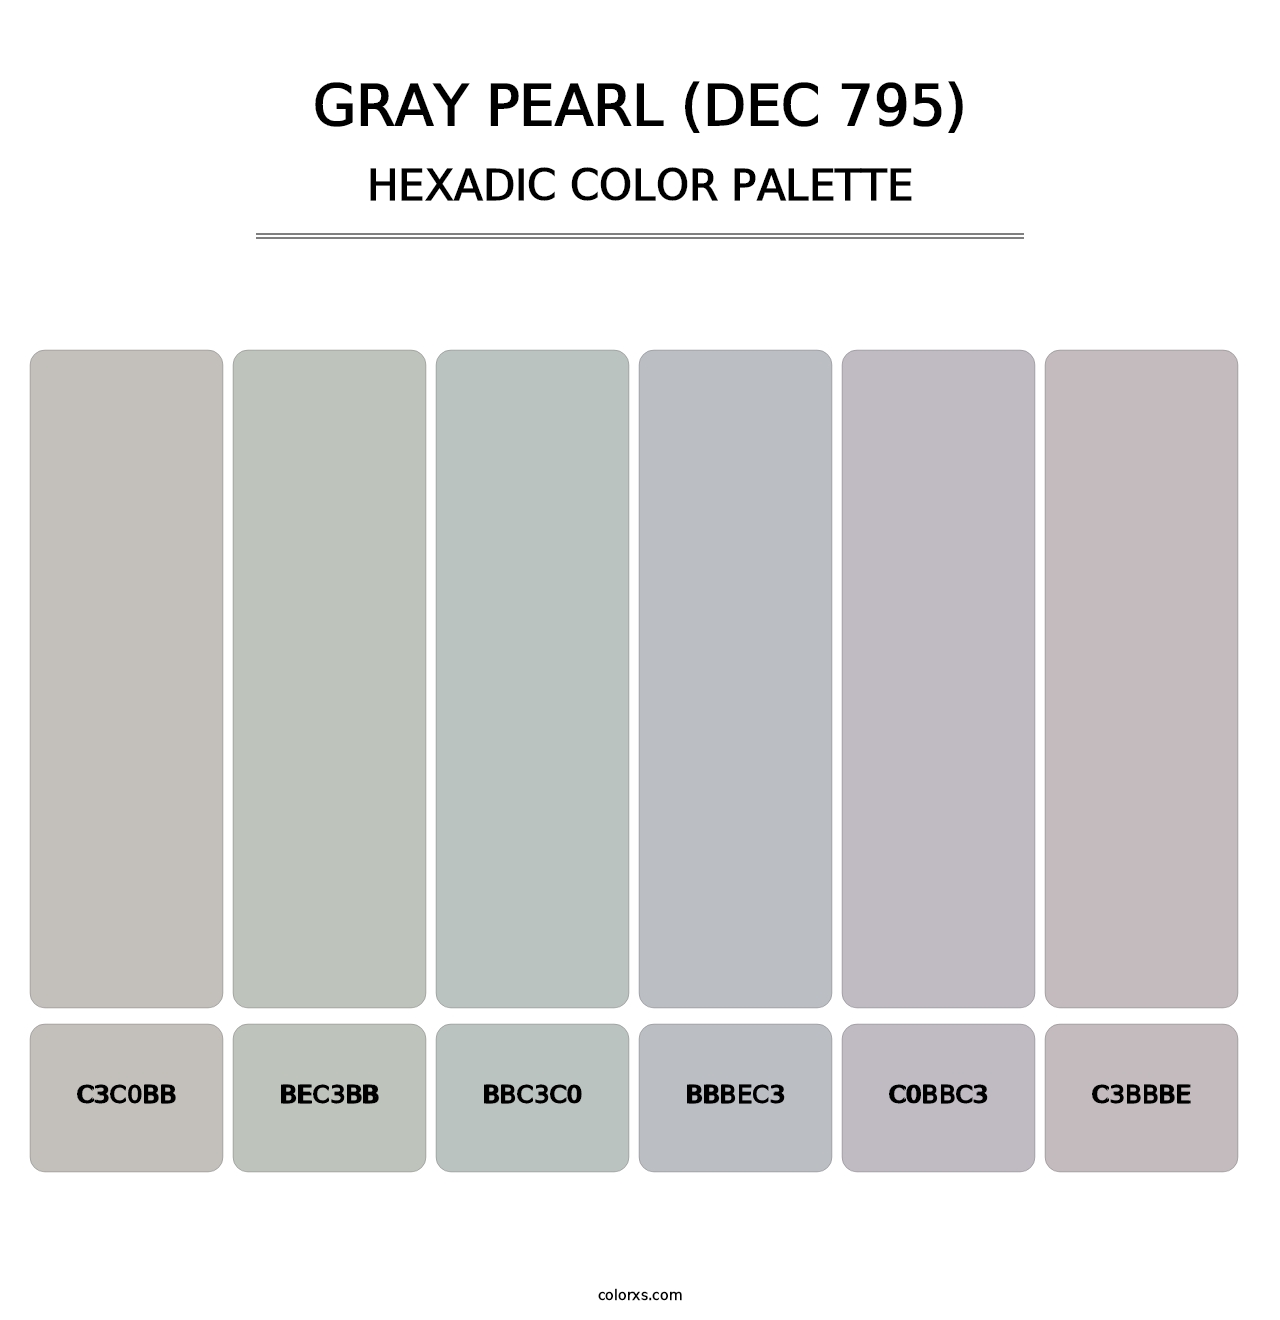 Gray Pearl (DEC 795) - Hexadic Color Palette